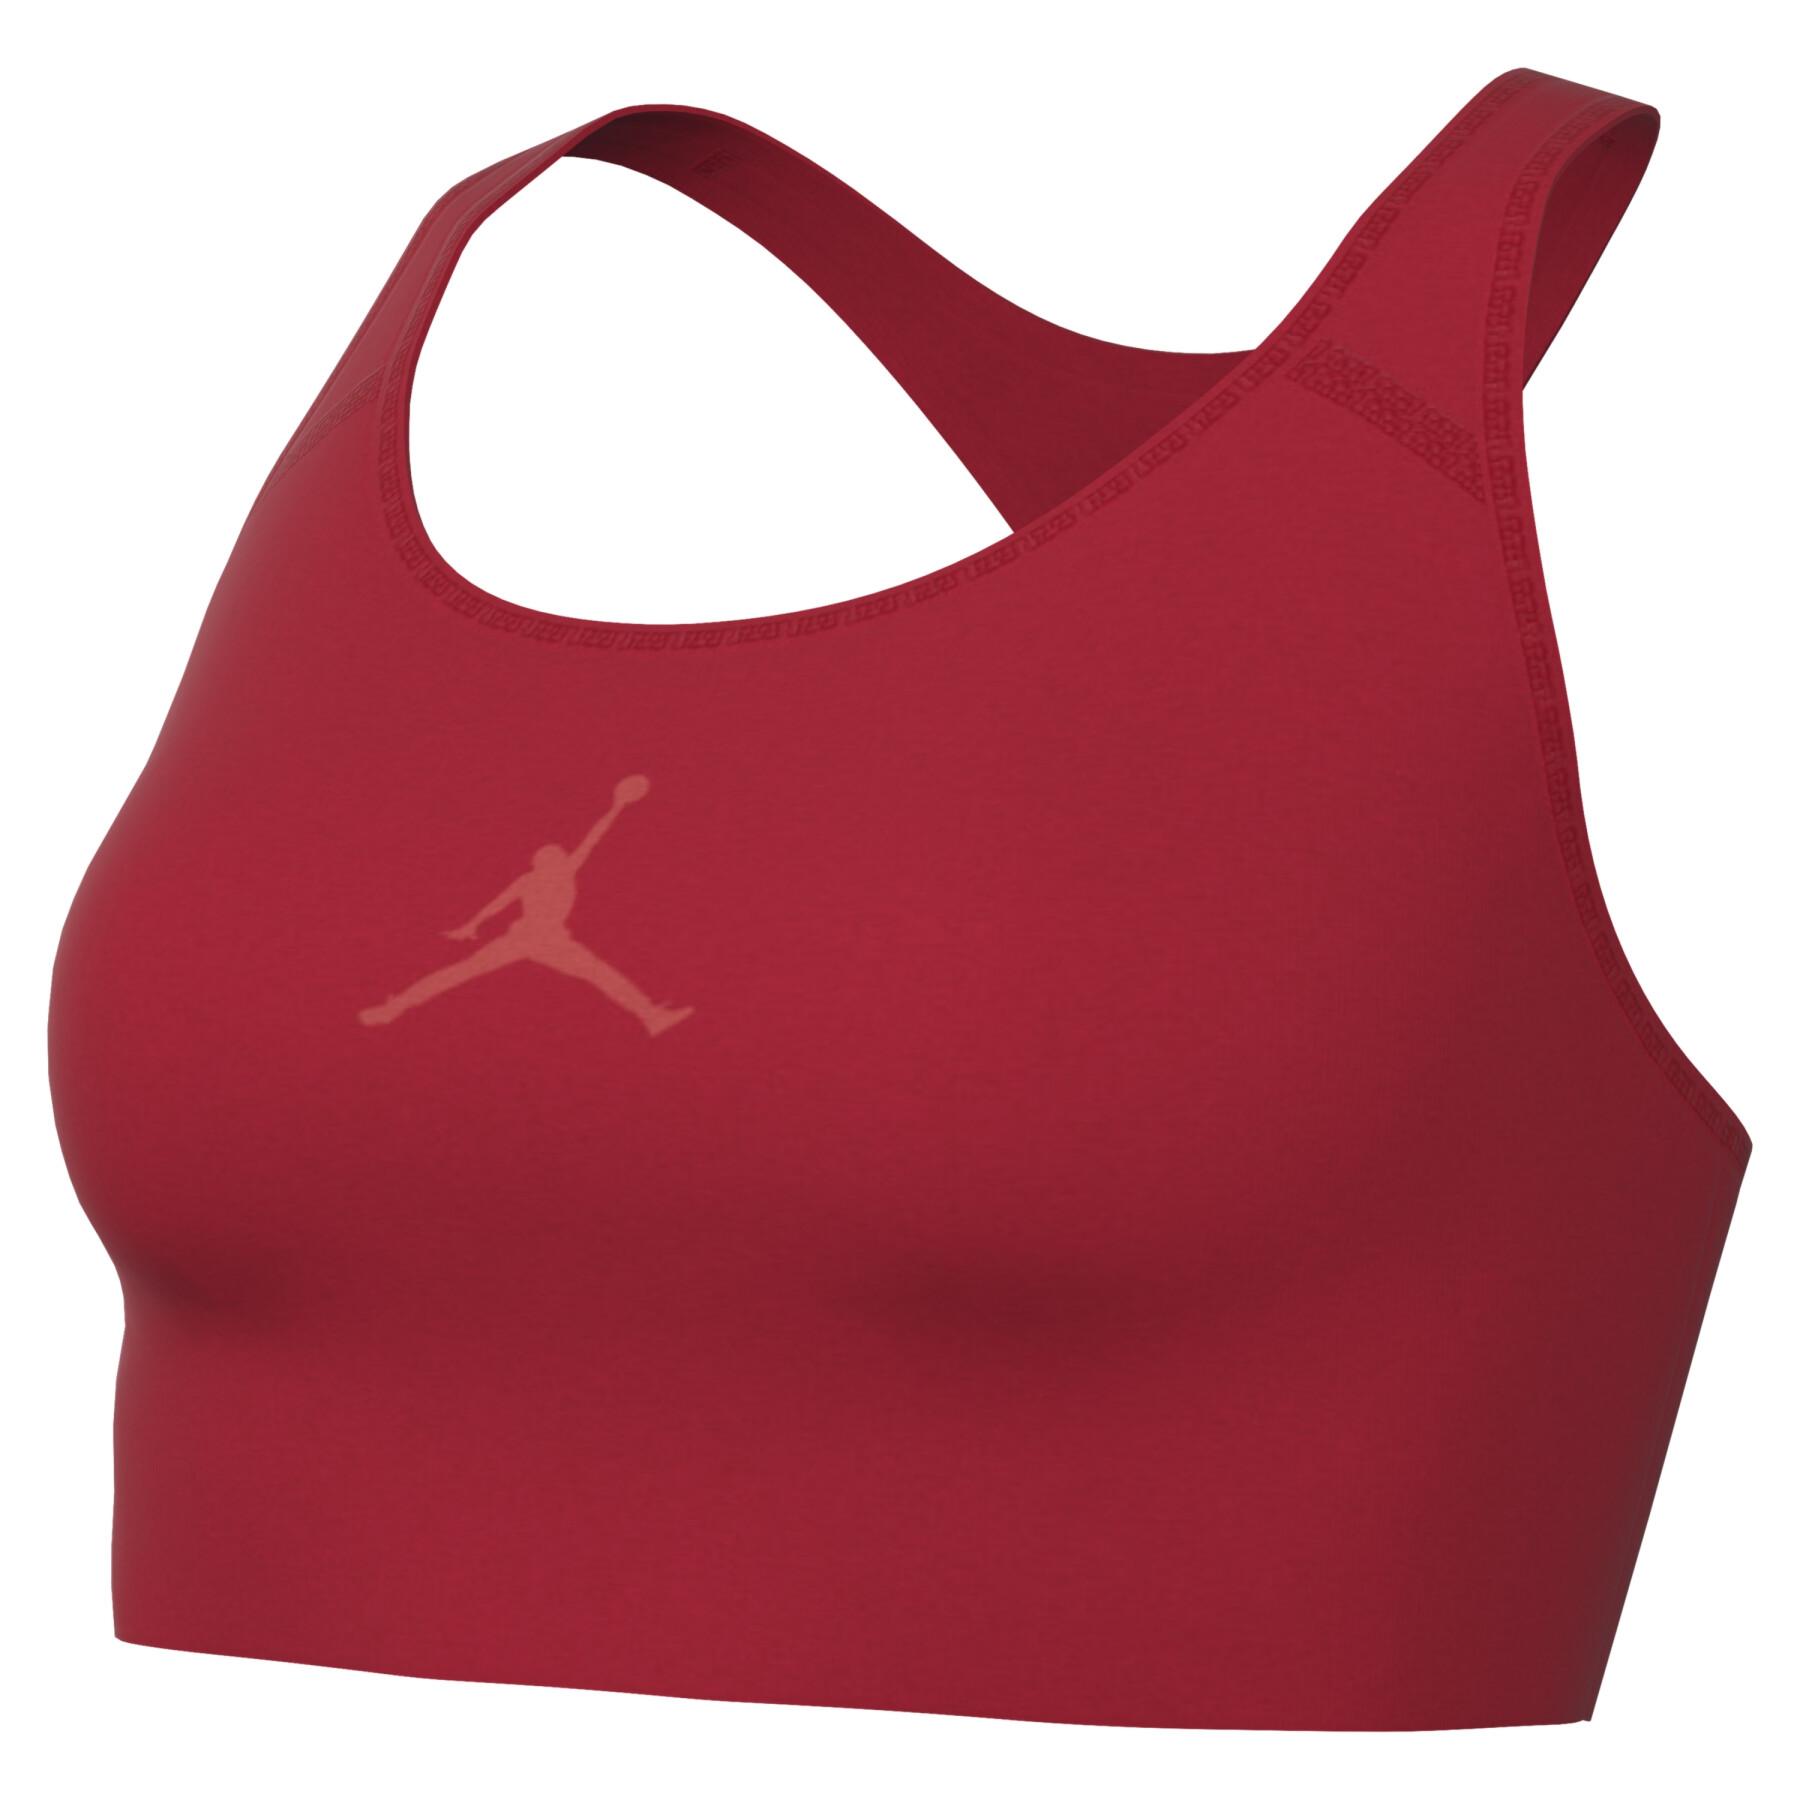 Women's bra Jordan Jumpman